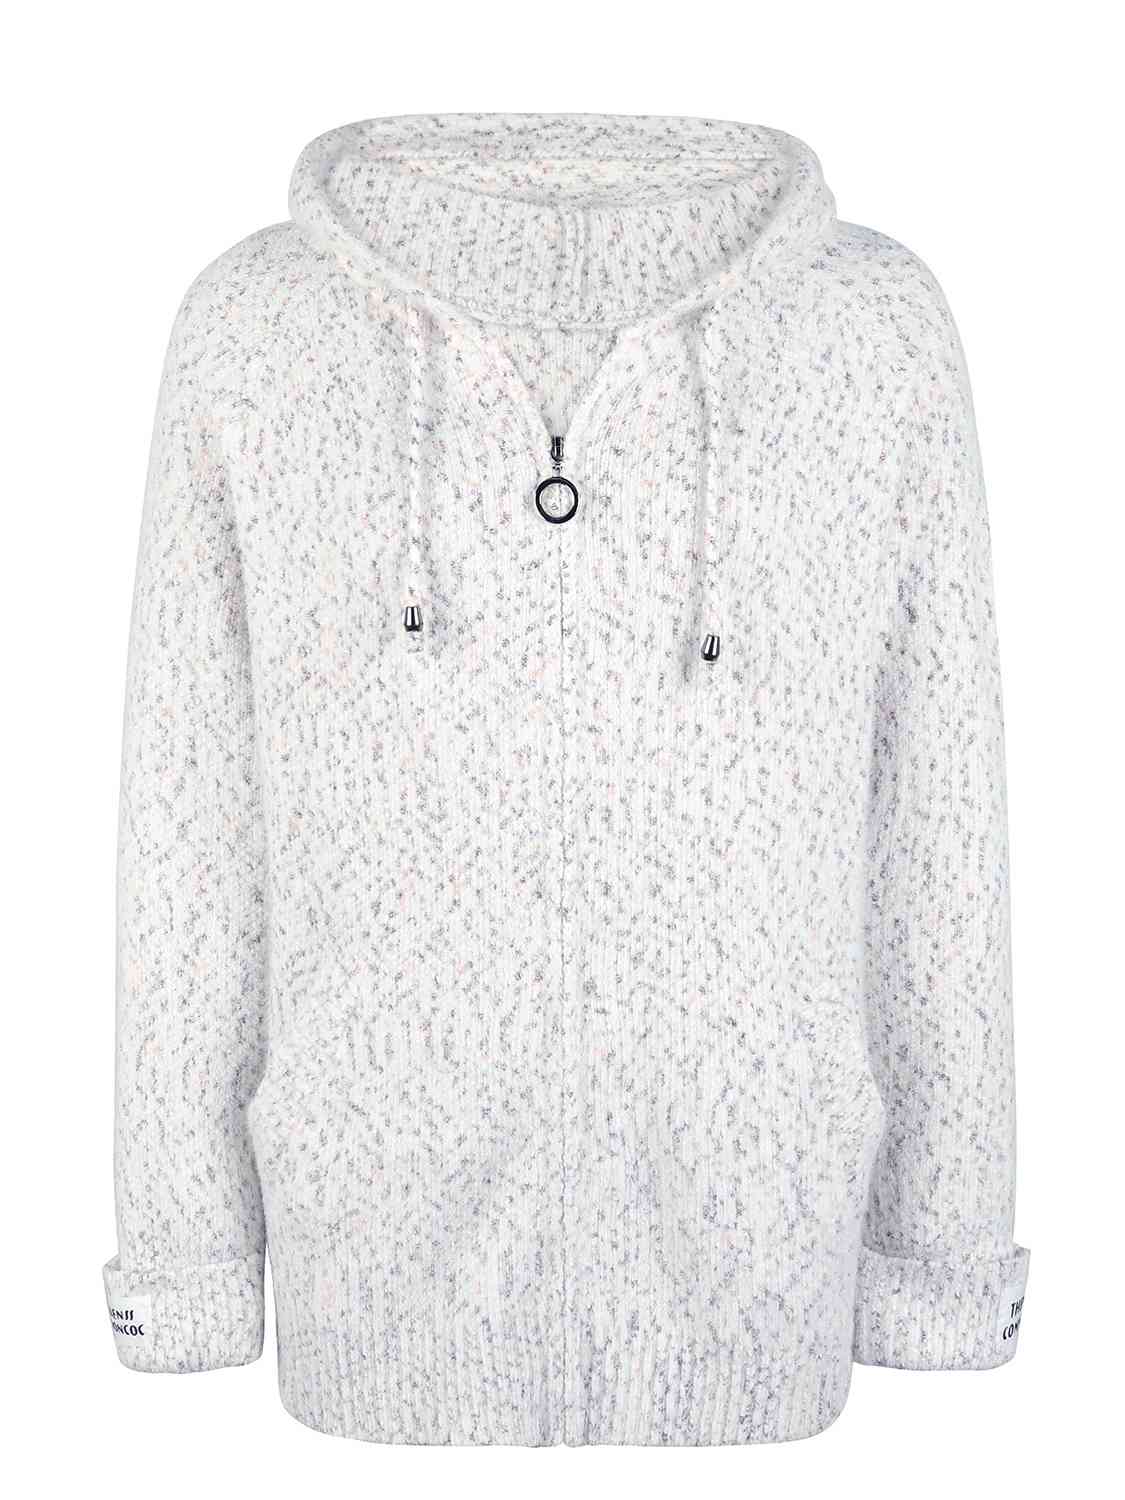 Zip-Up Hooded Sweater